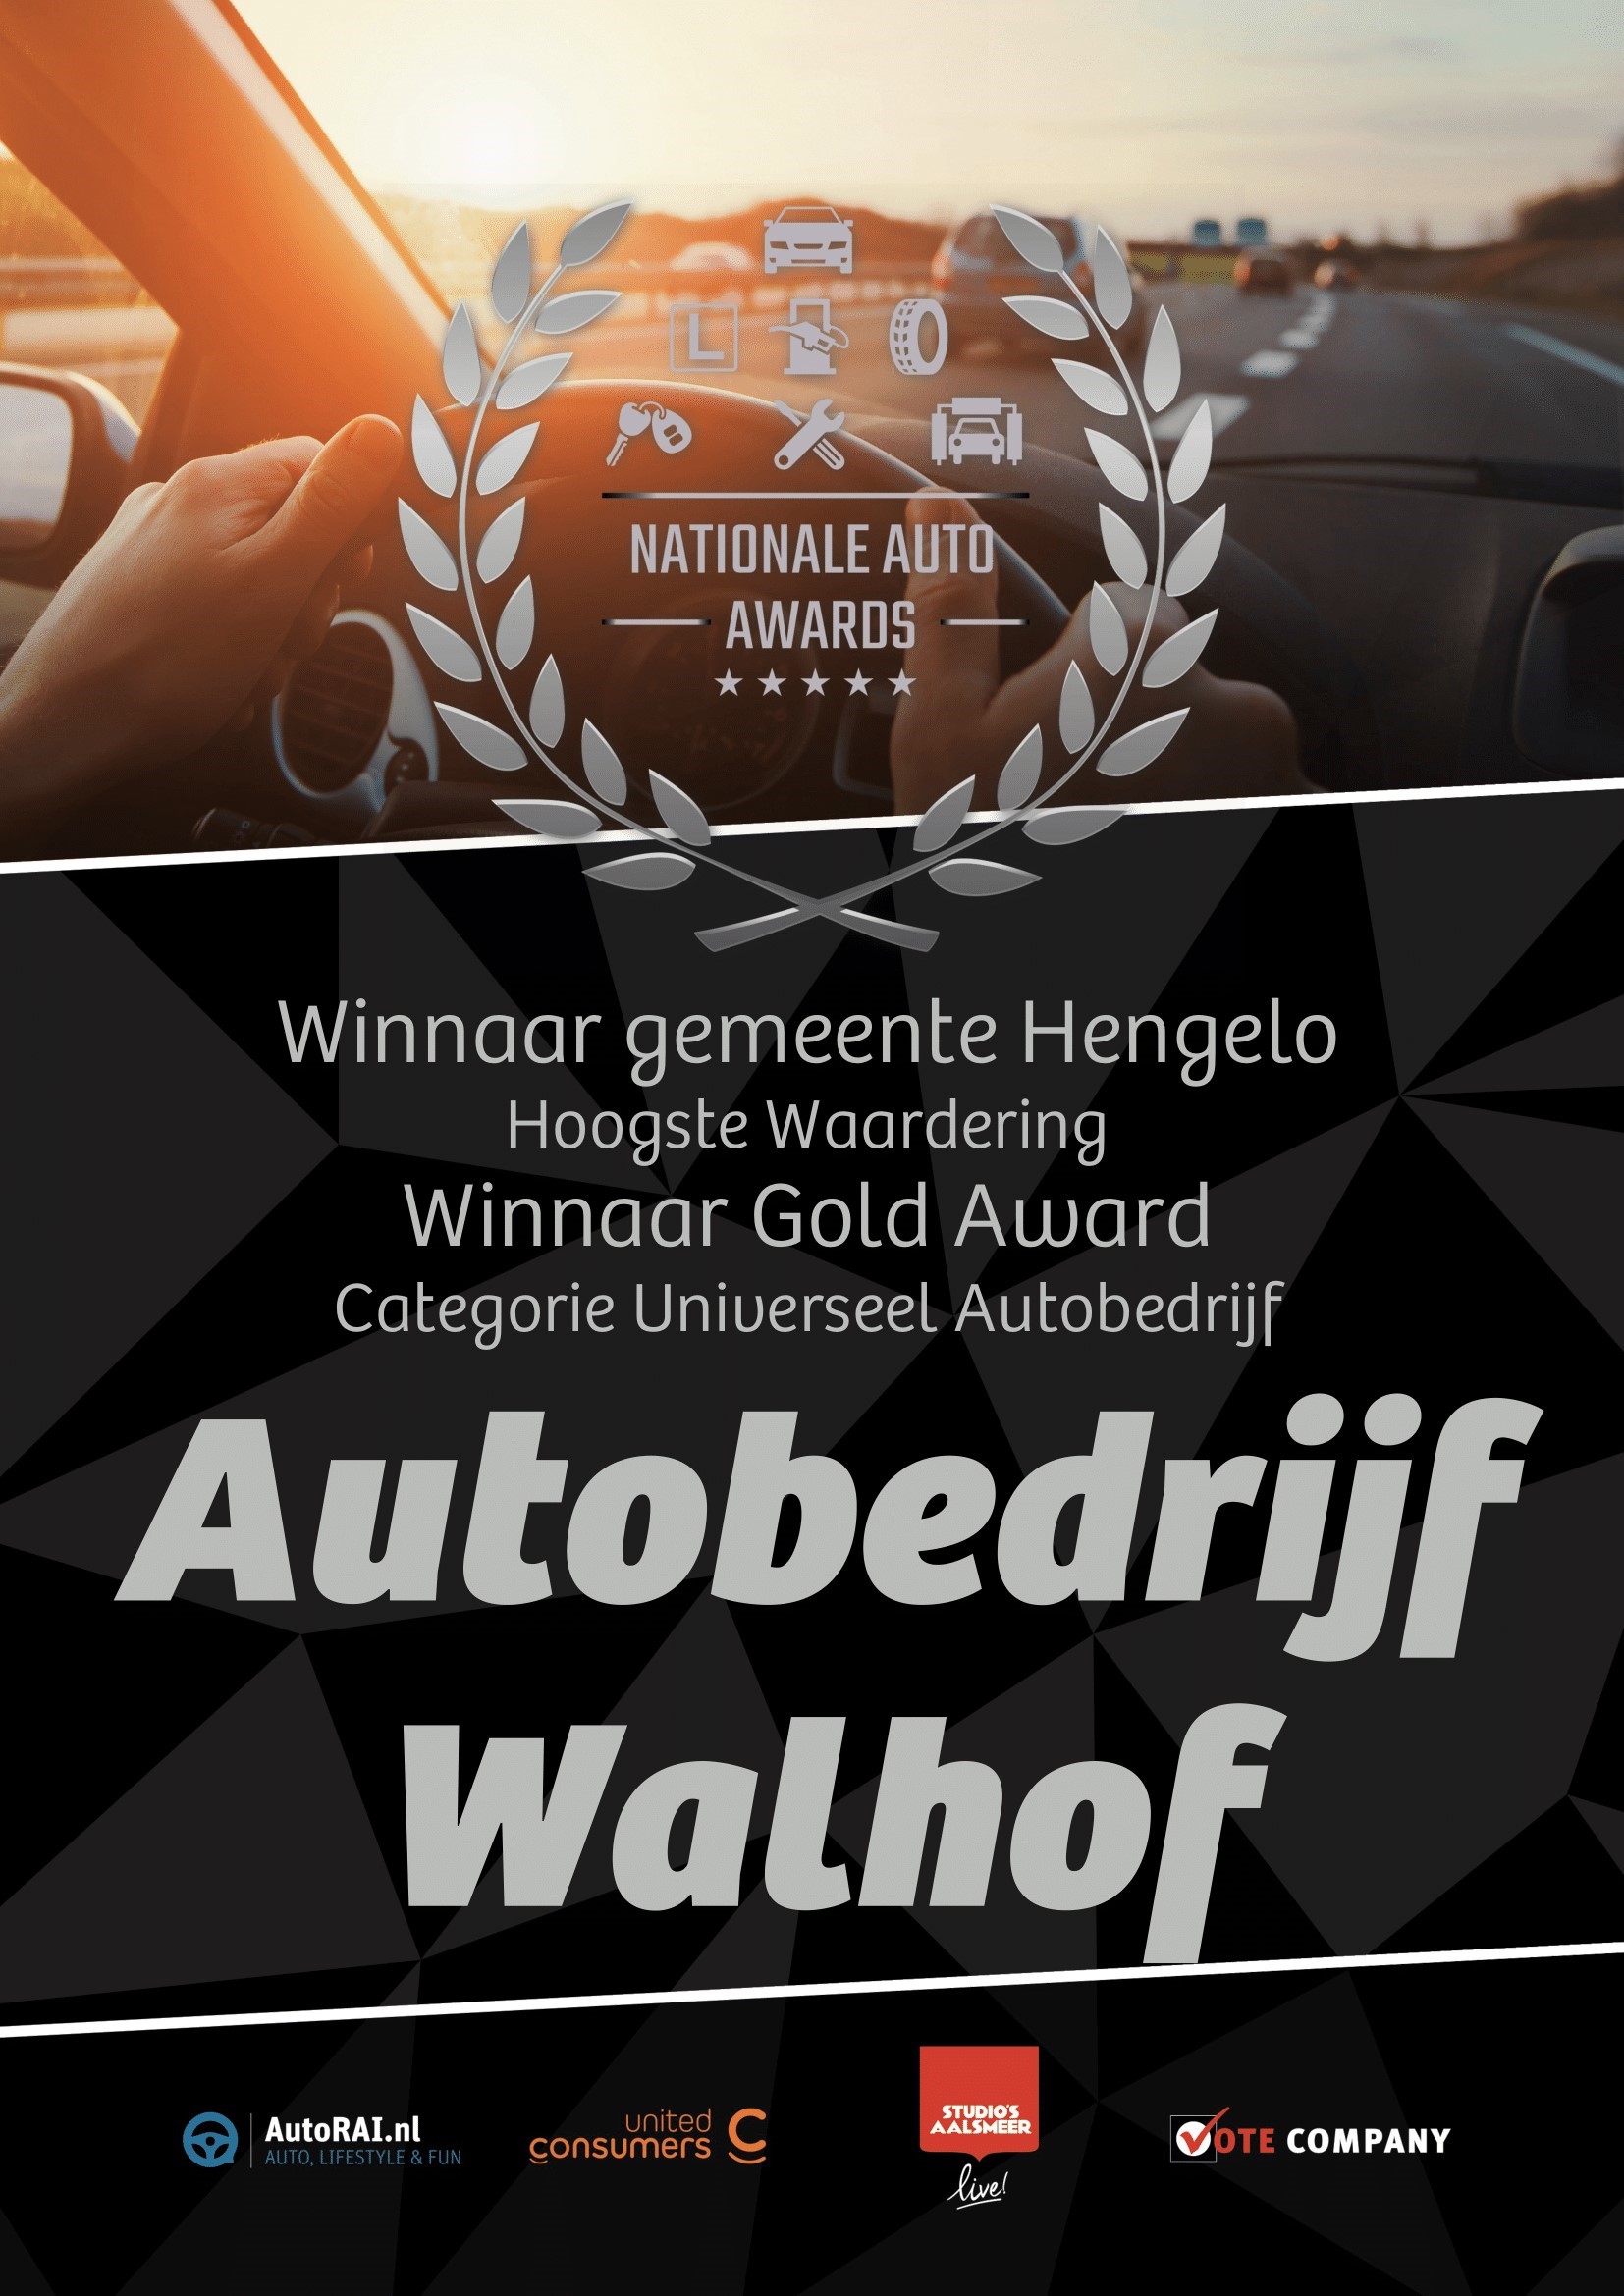 Welkom Autobedrijf R. Walhof